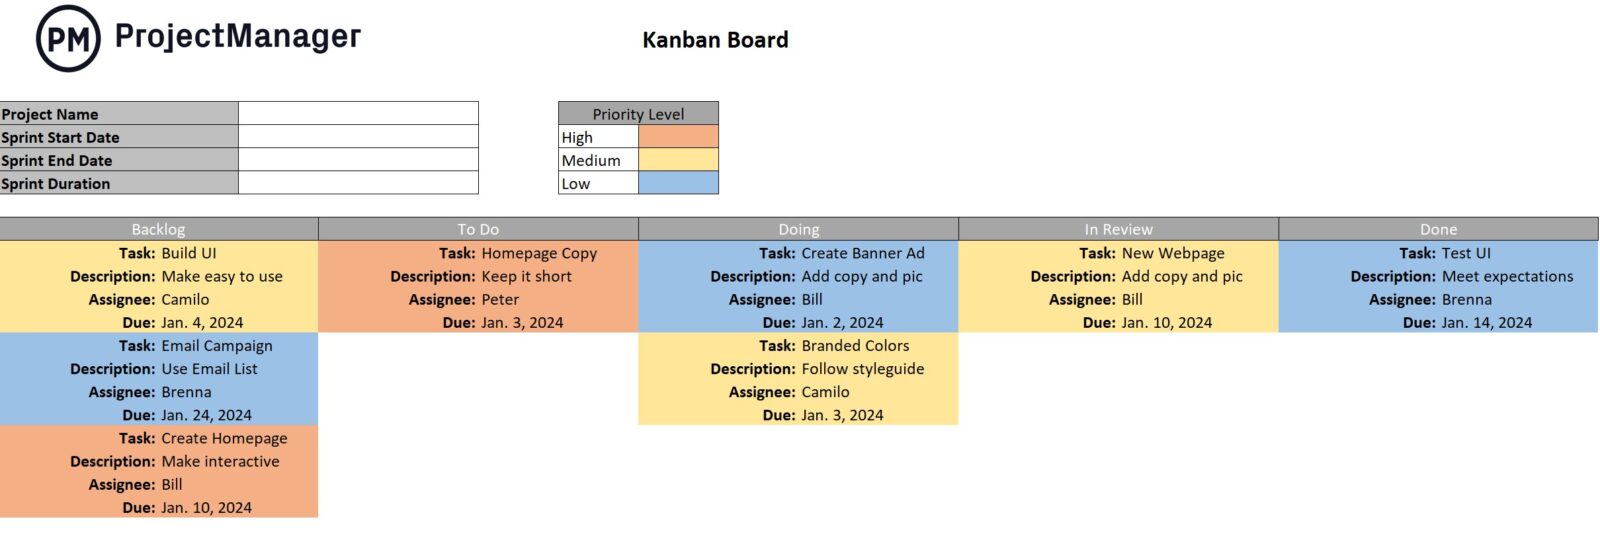 kanban board template for Excel